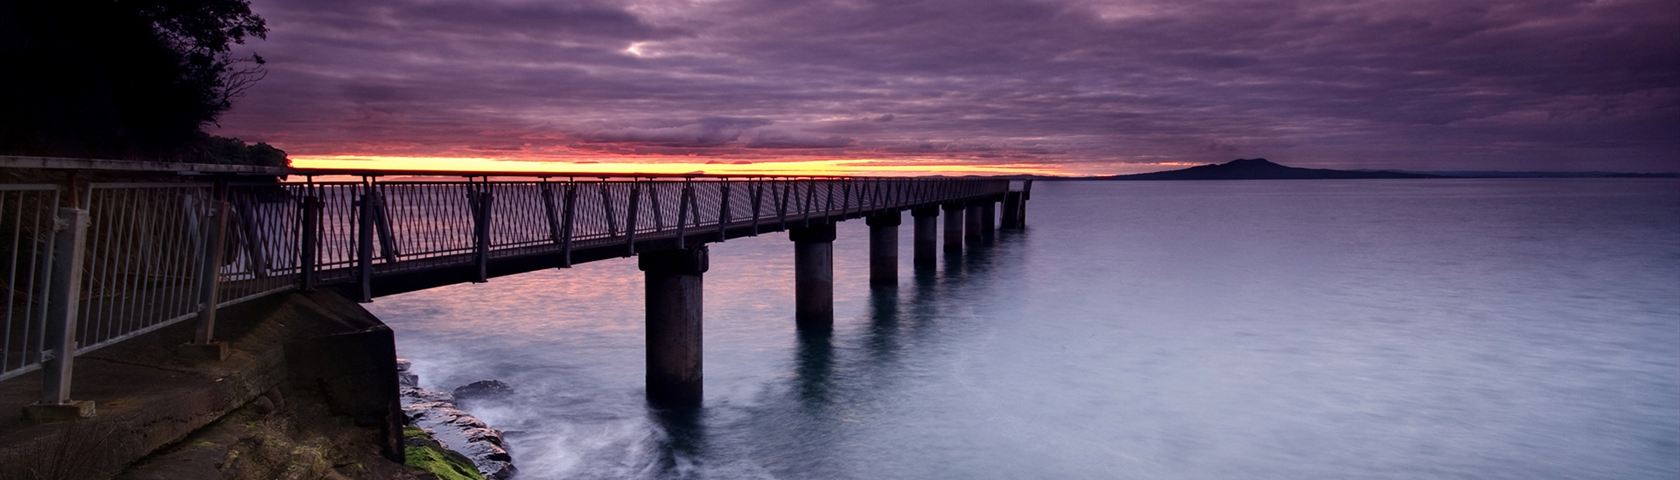 Bridge Under Purple Sky